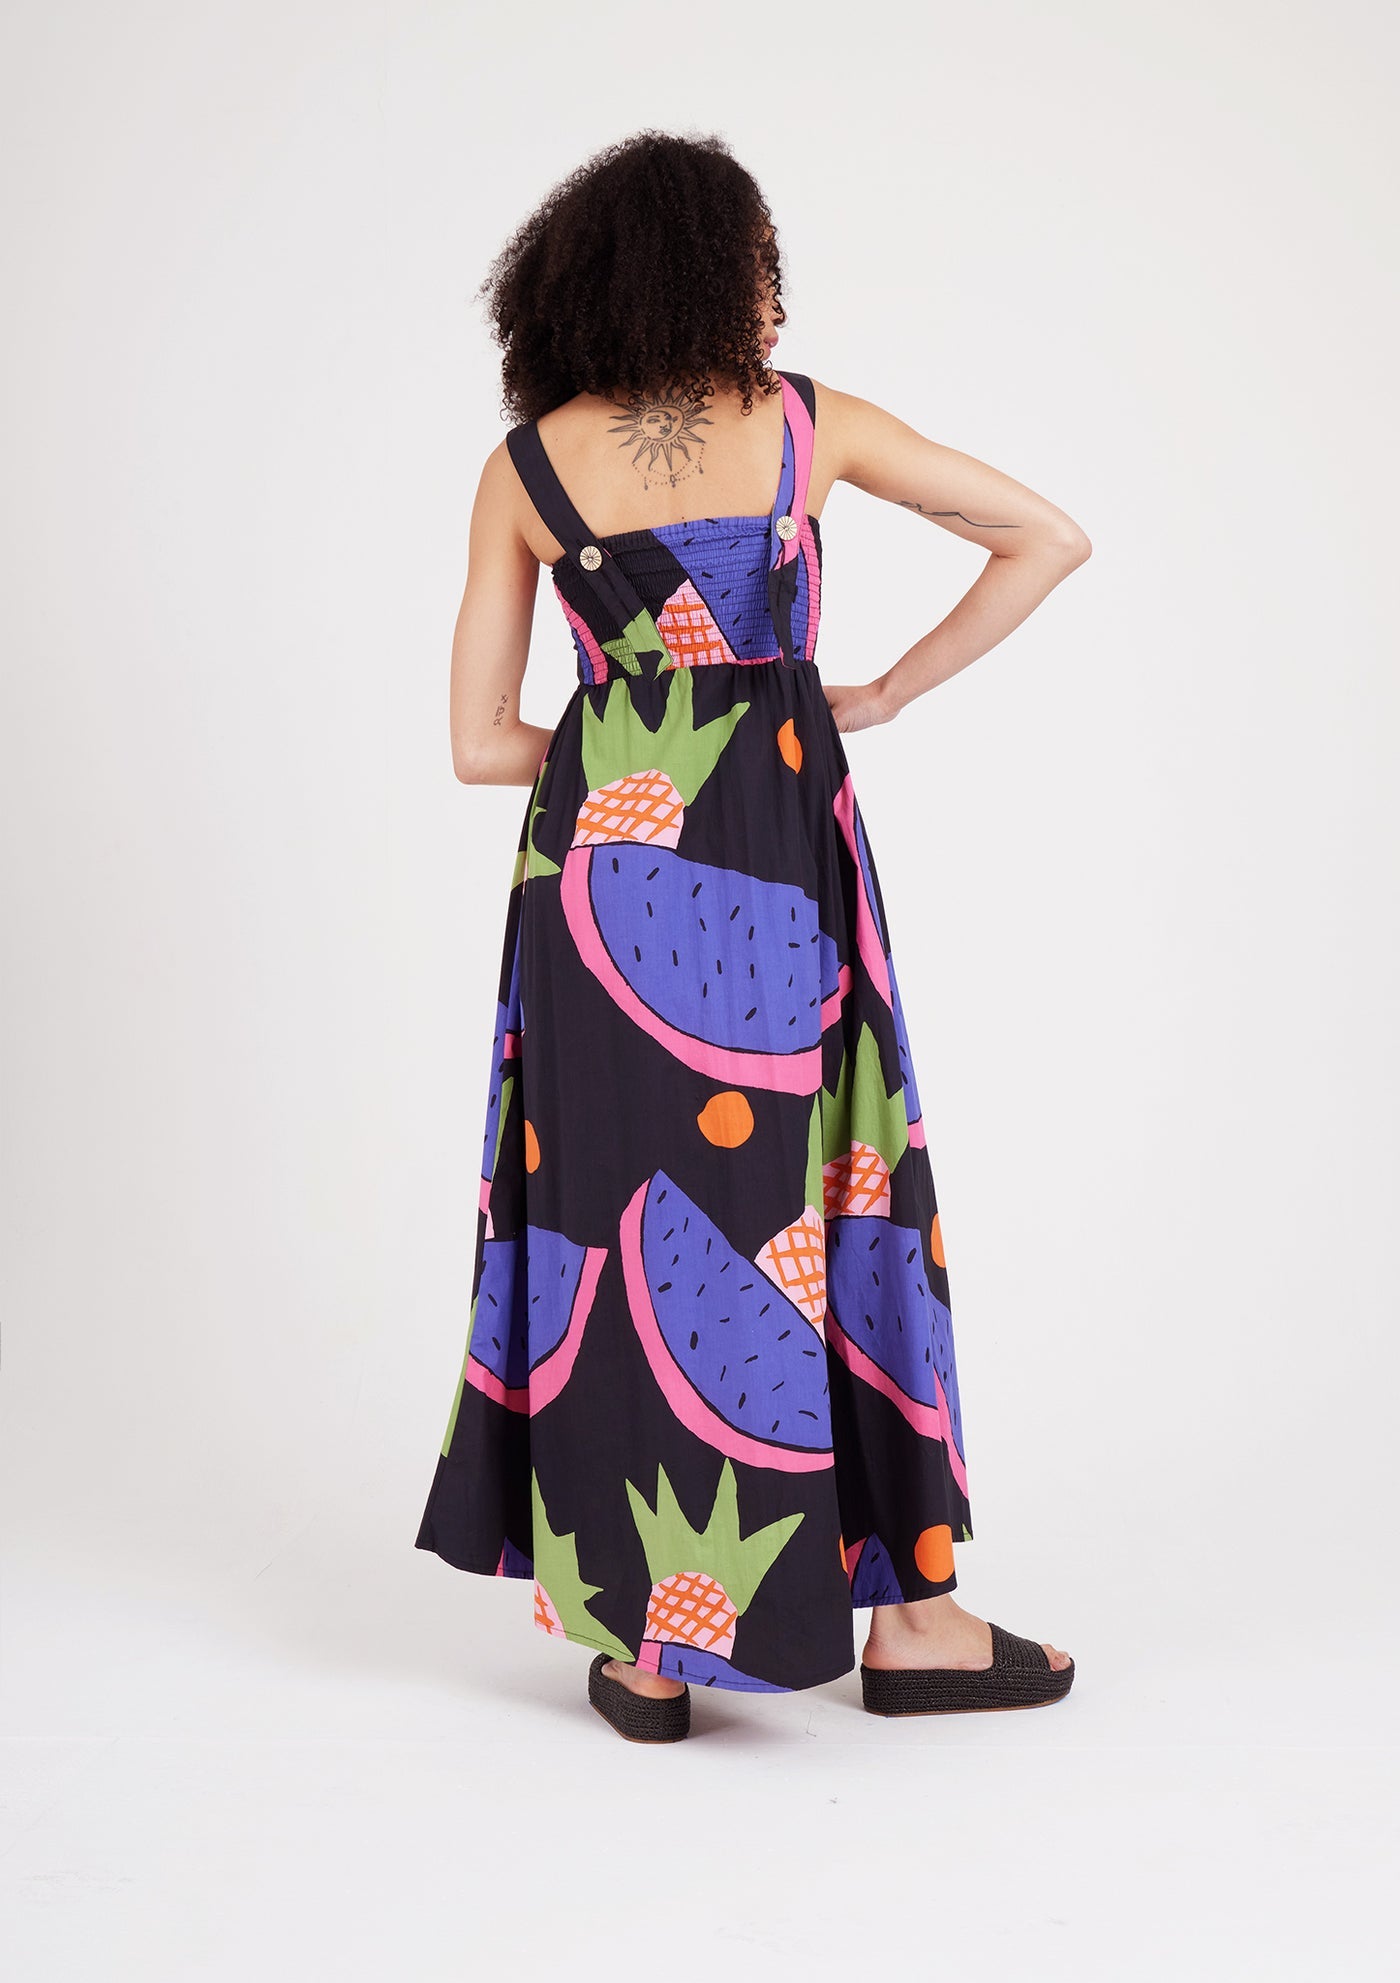 BEL KAZAN Janie Dress in Black Melon